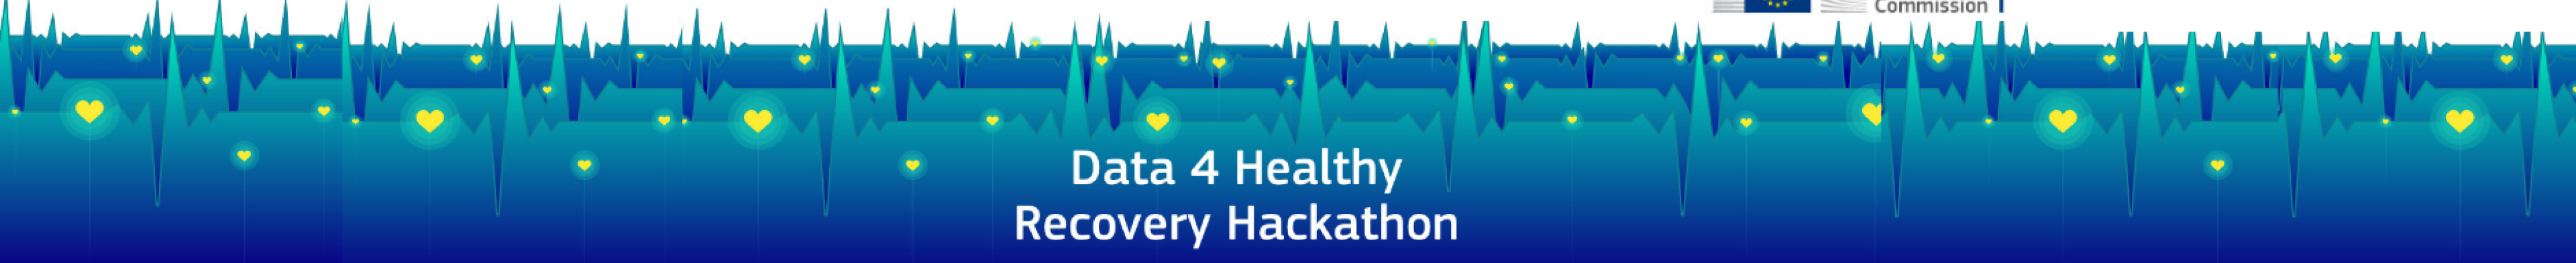 banner-data4healthyrecoveryhackathon.png